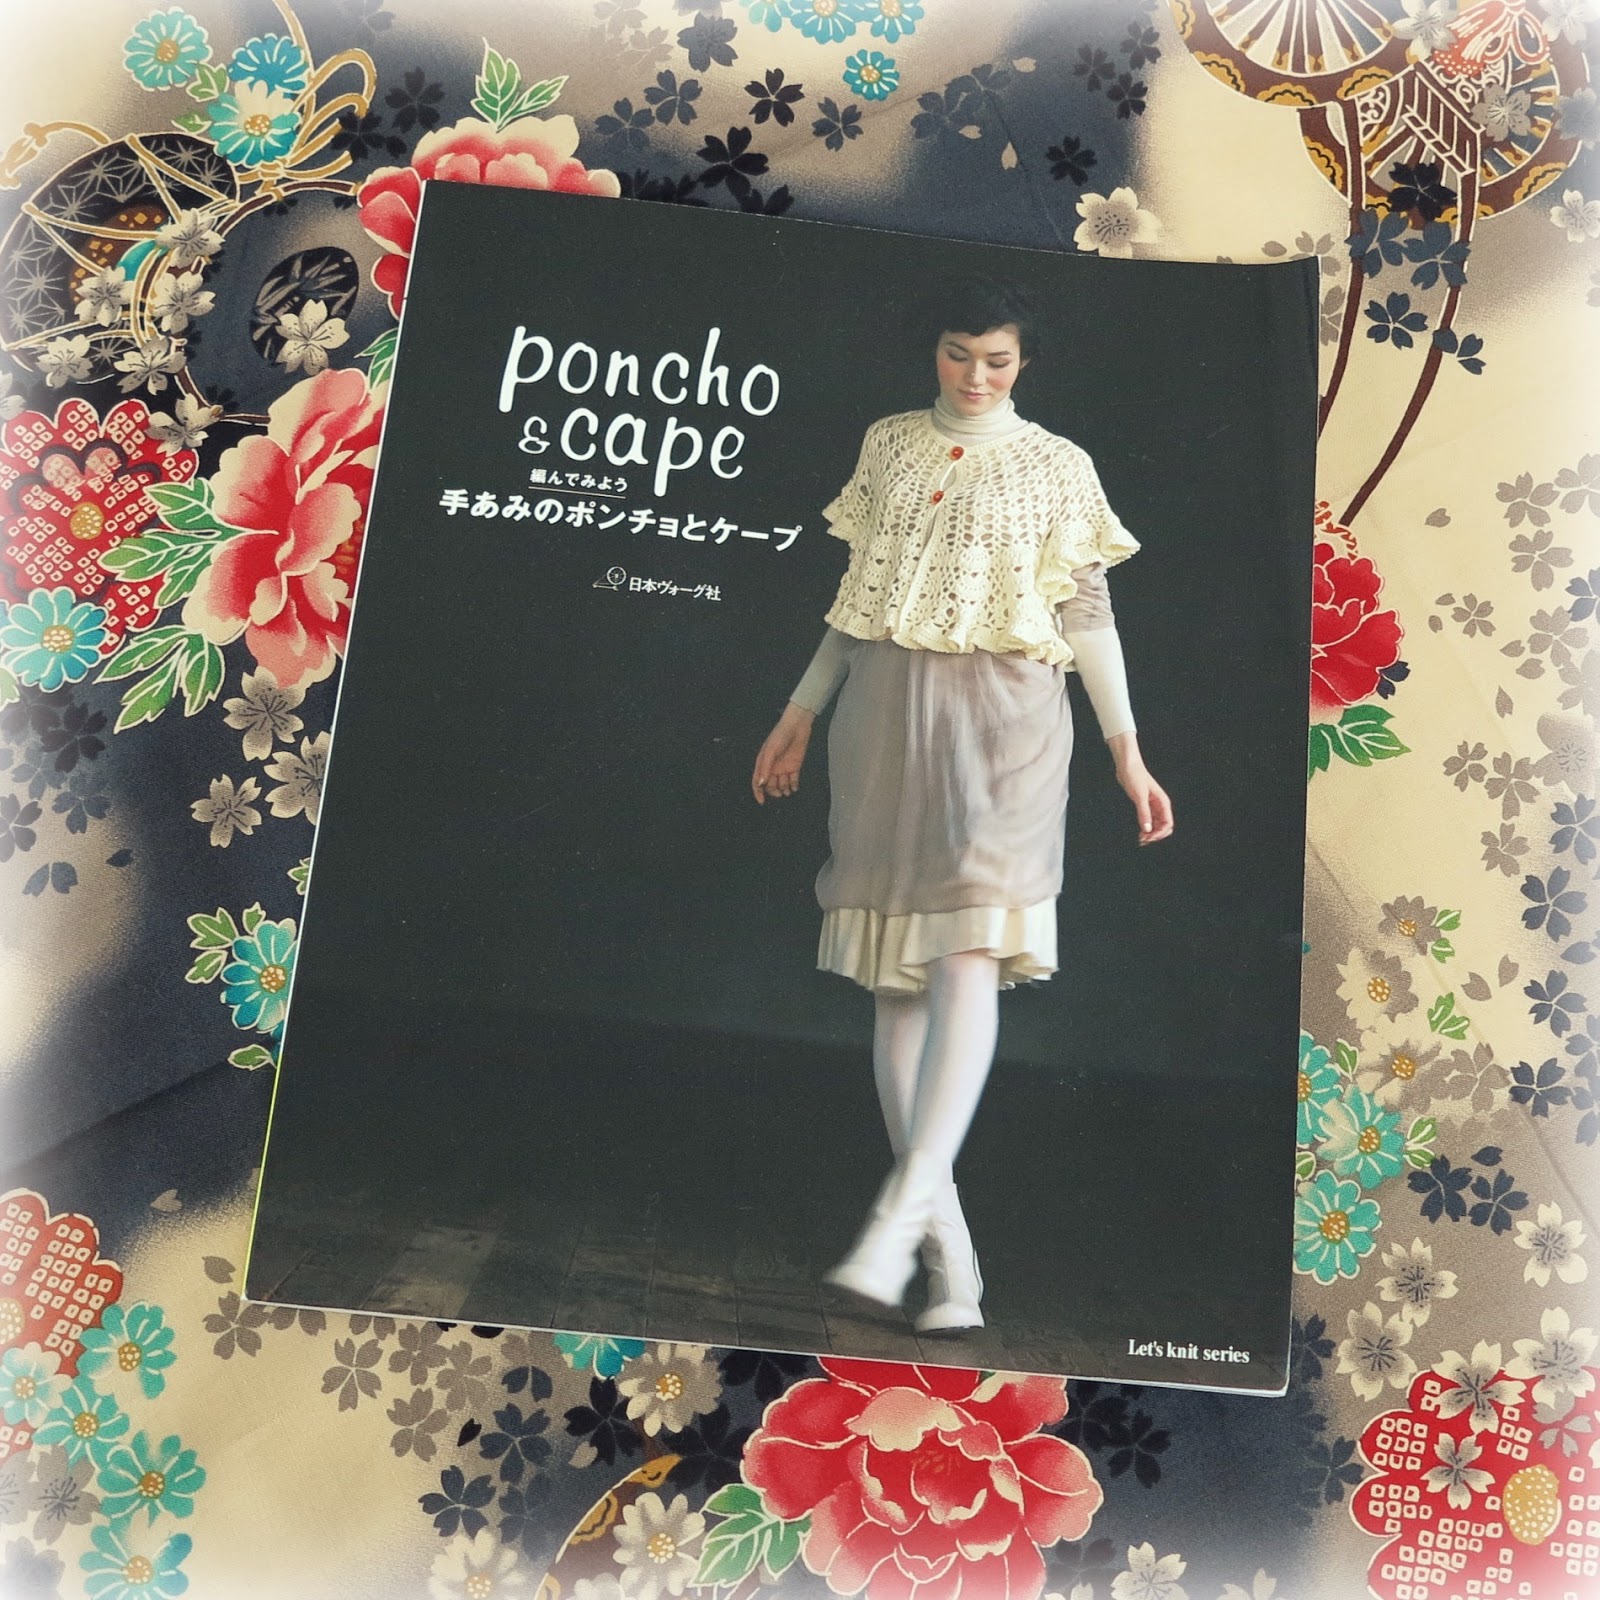 ByHaafner, japanese crochet book, poncho & cape